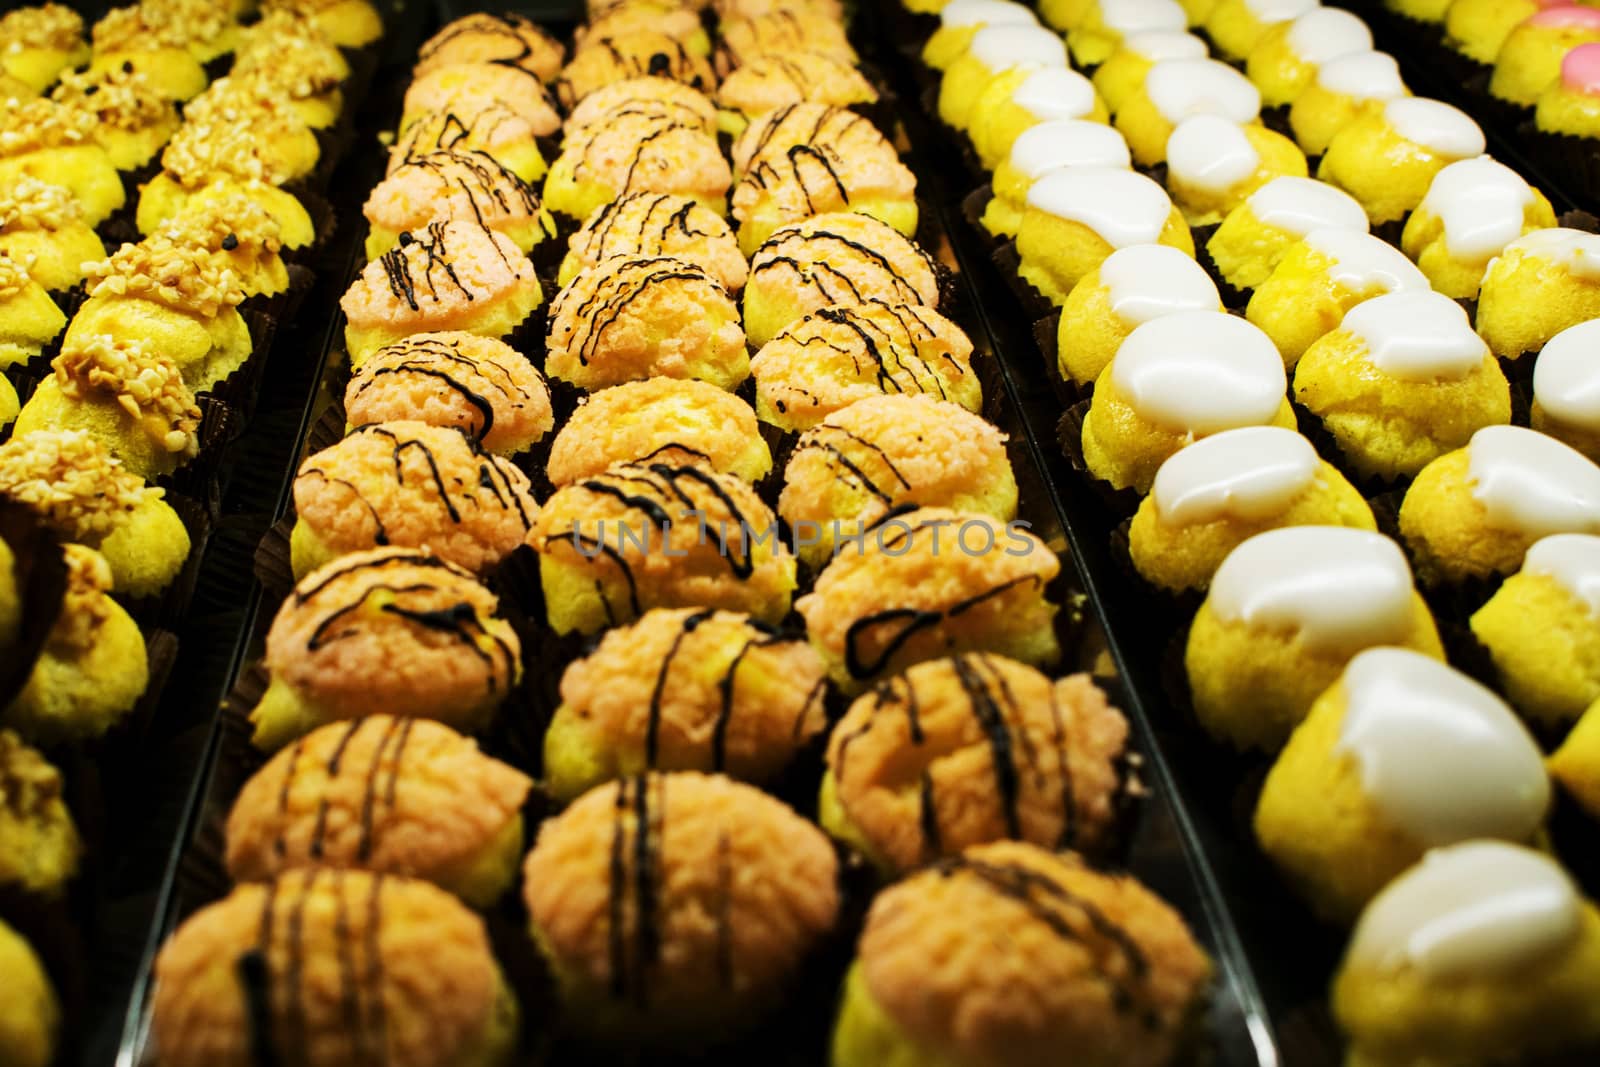 Pastries by federica_favara